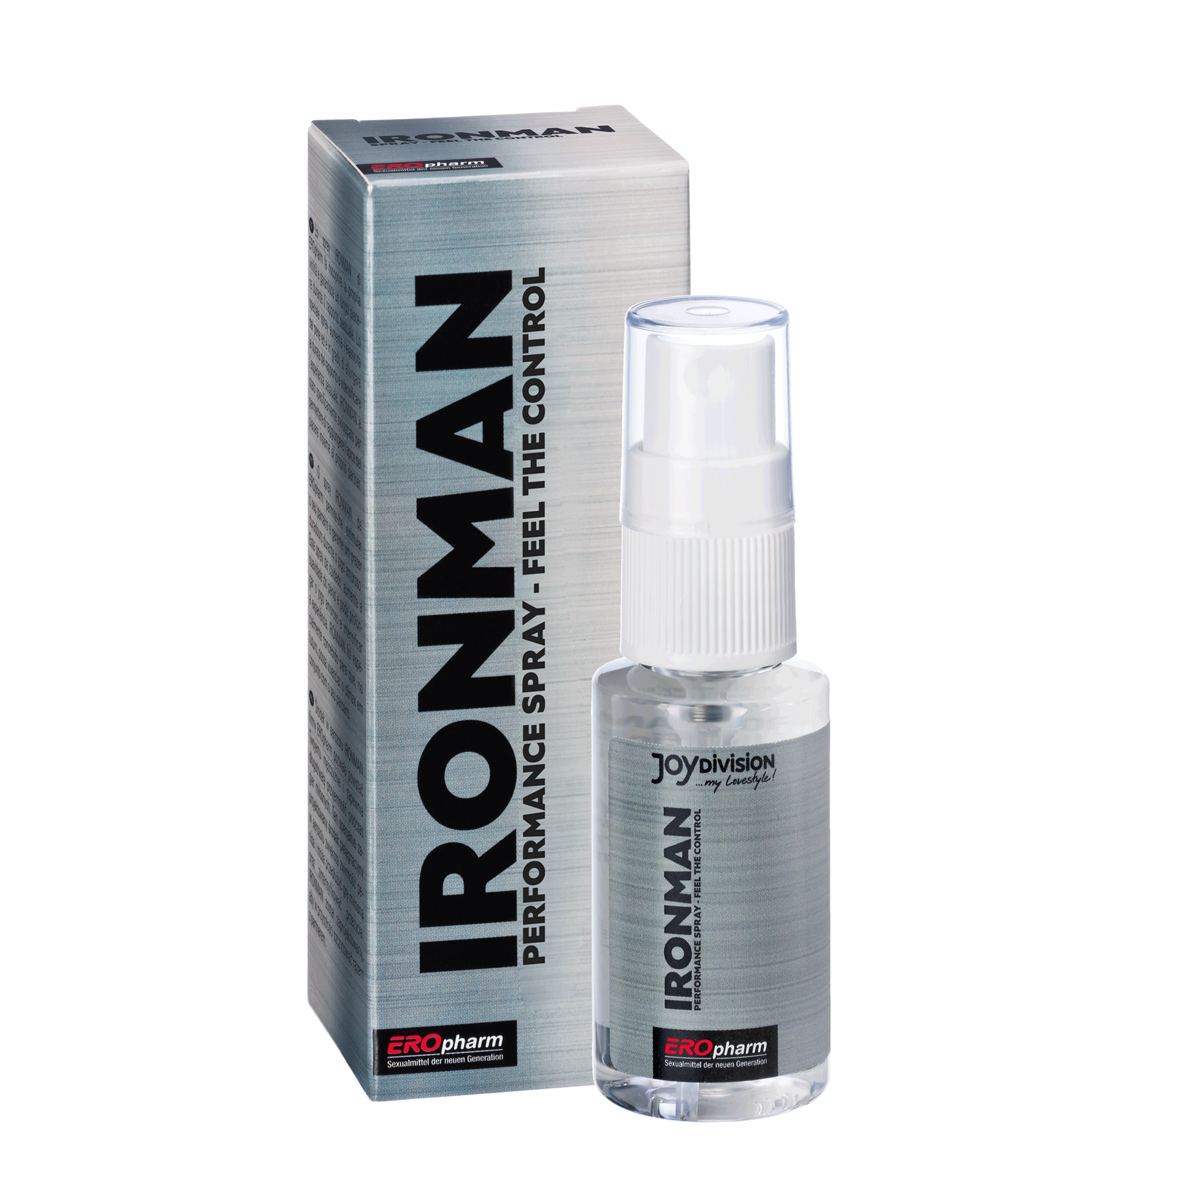 EROpharm – I Ironman Performance Spra 30 ml